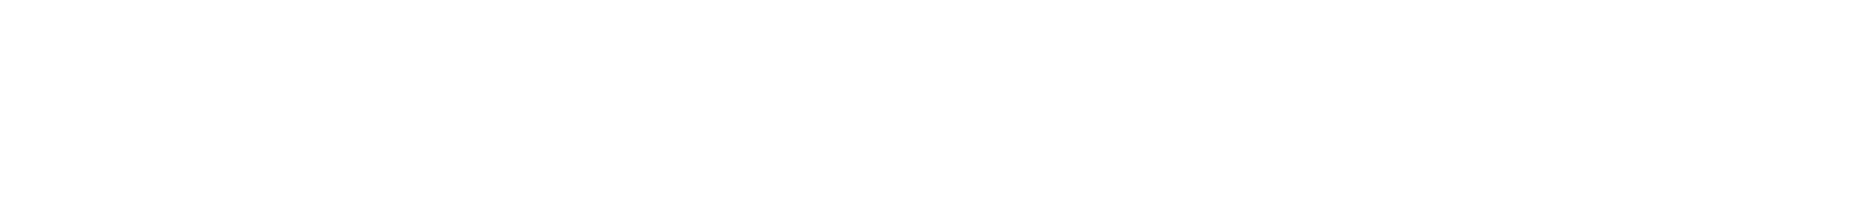 Digital Marketing Company in Shreveport - Appear Digital Logo